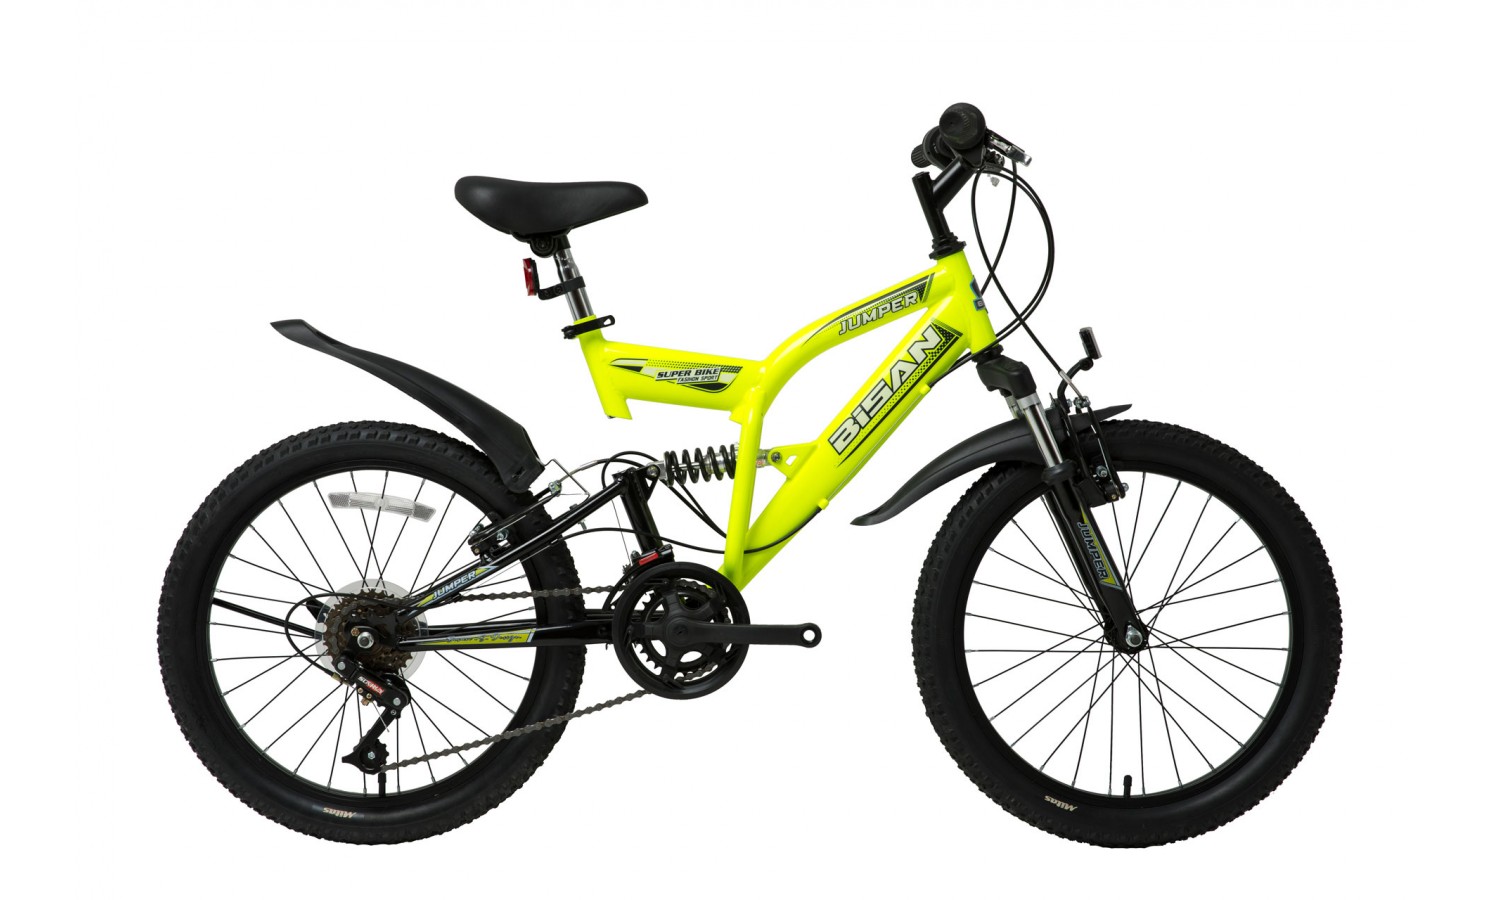 Bisan Jumper Çocuk Bisikleti 20 Jant (Neon Sarı-Siyah)